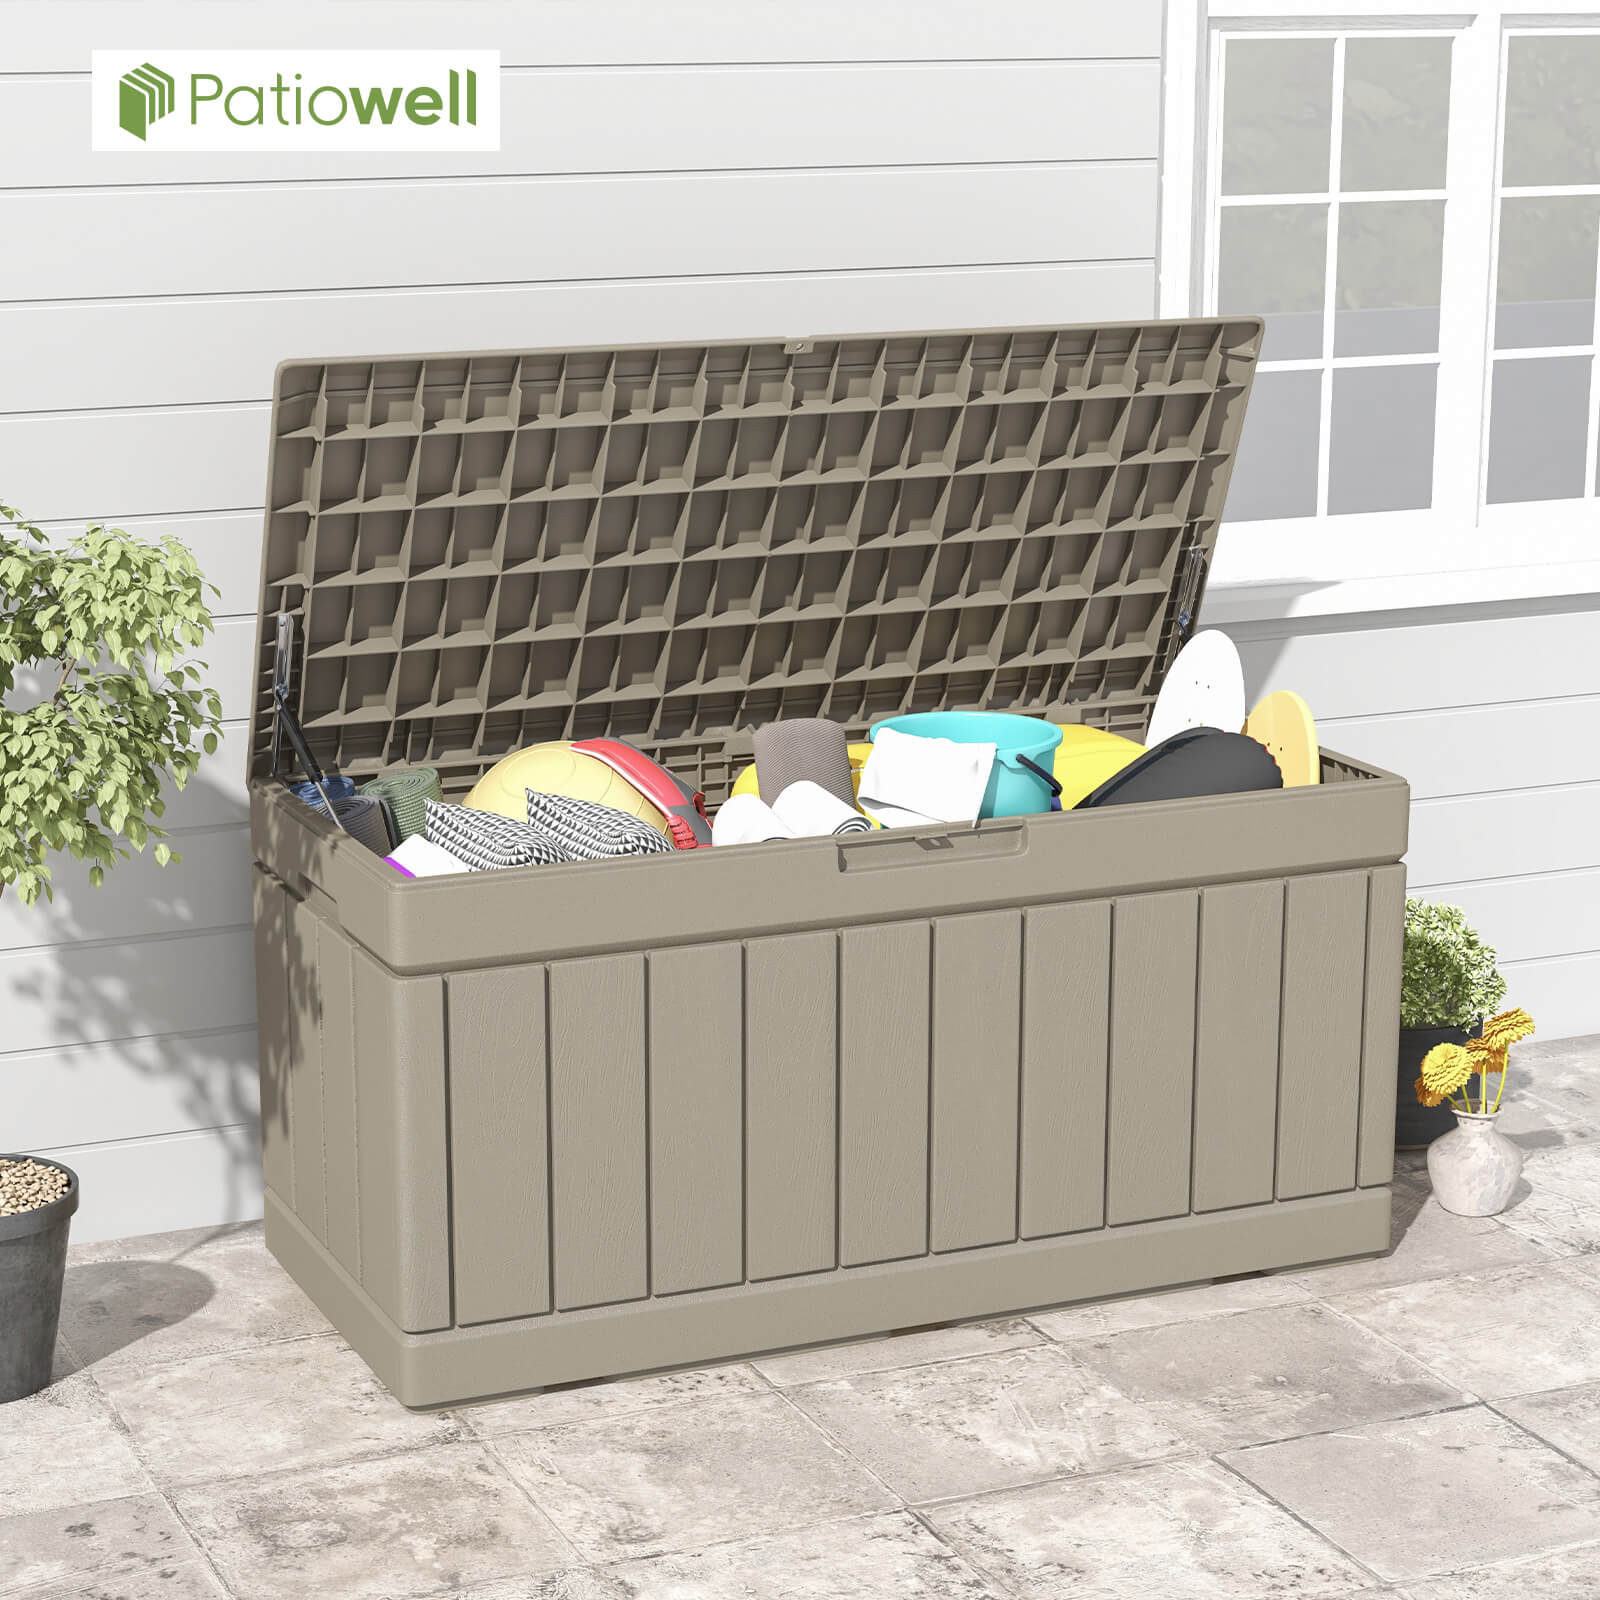 Patiowell 82 Gallon Deck Box Outdoor Storage Resin Wood Look Storage ...